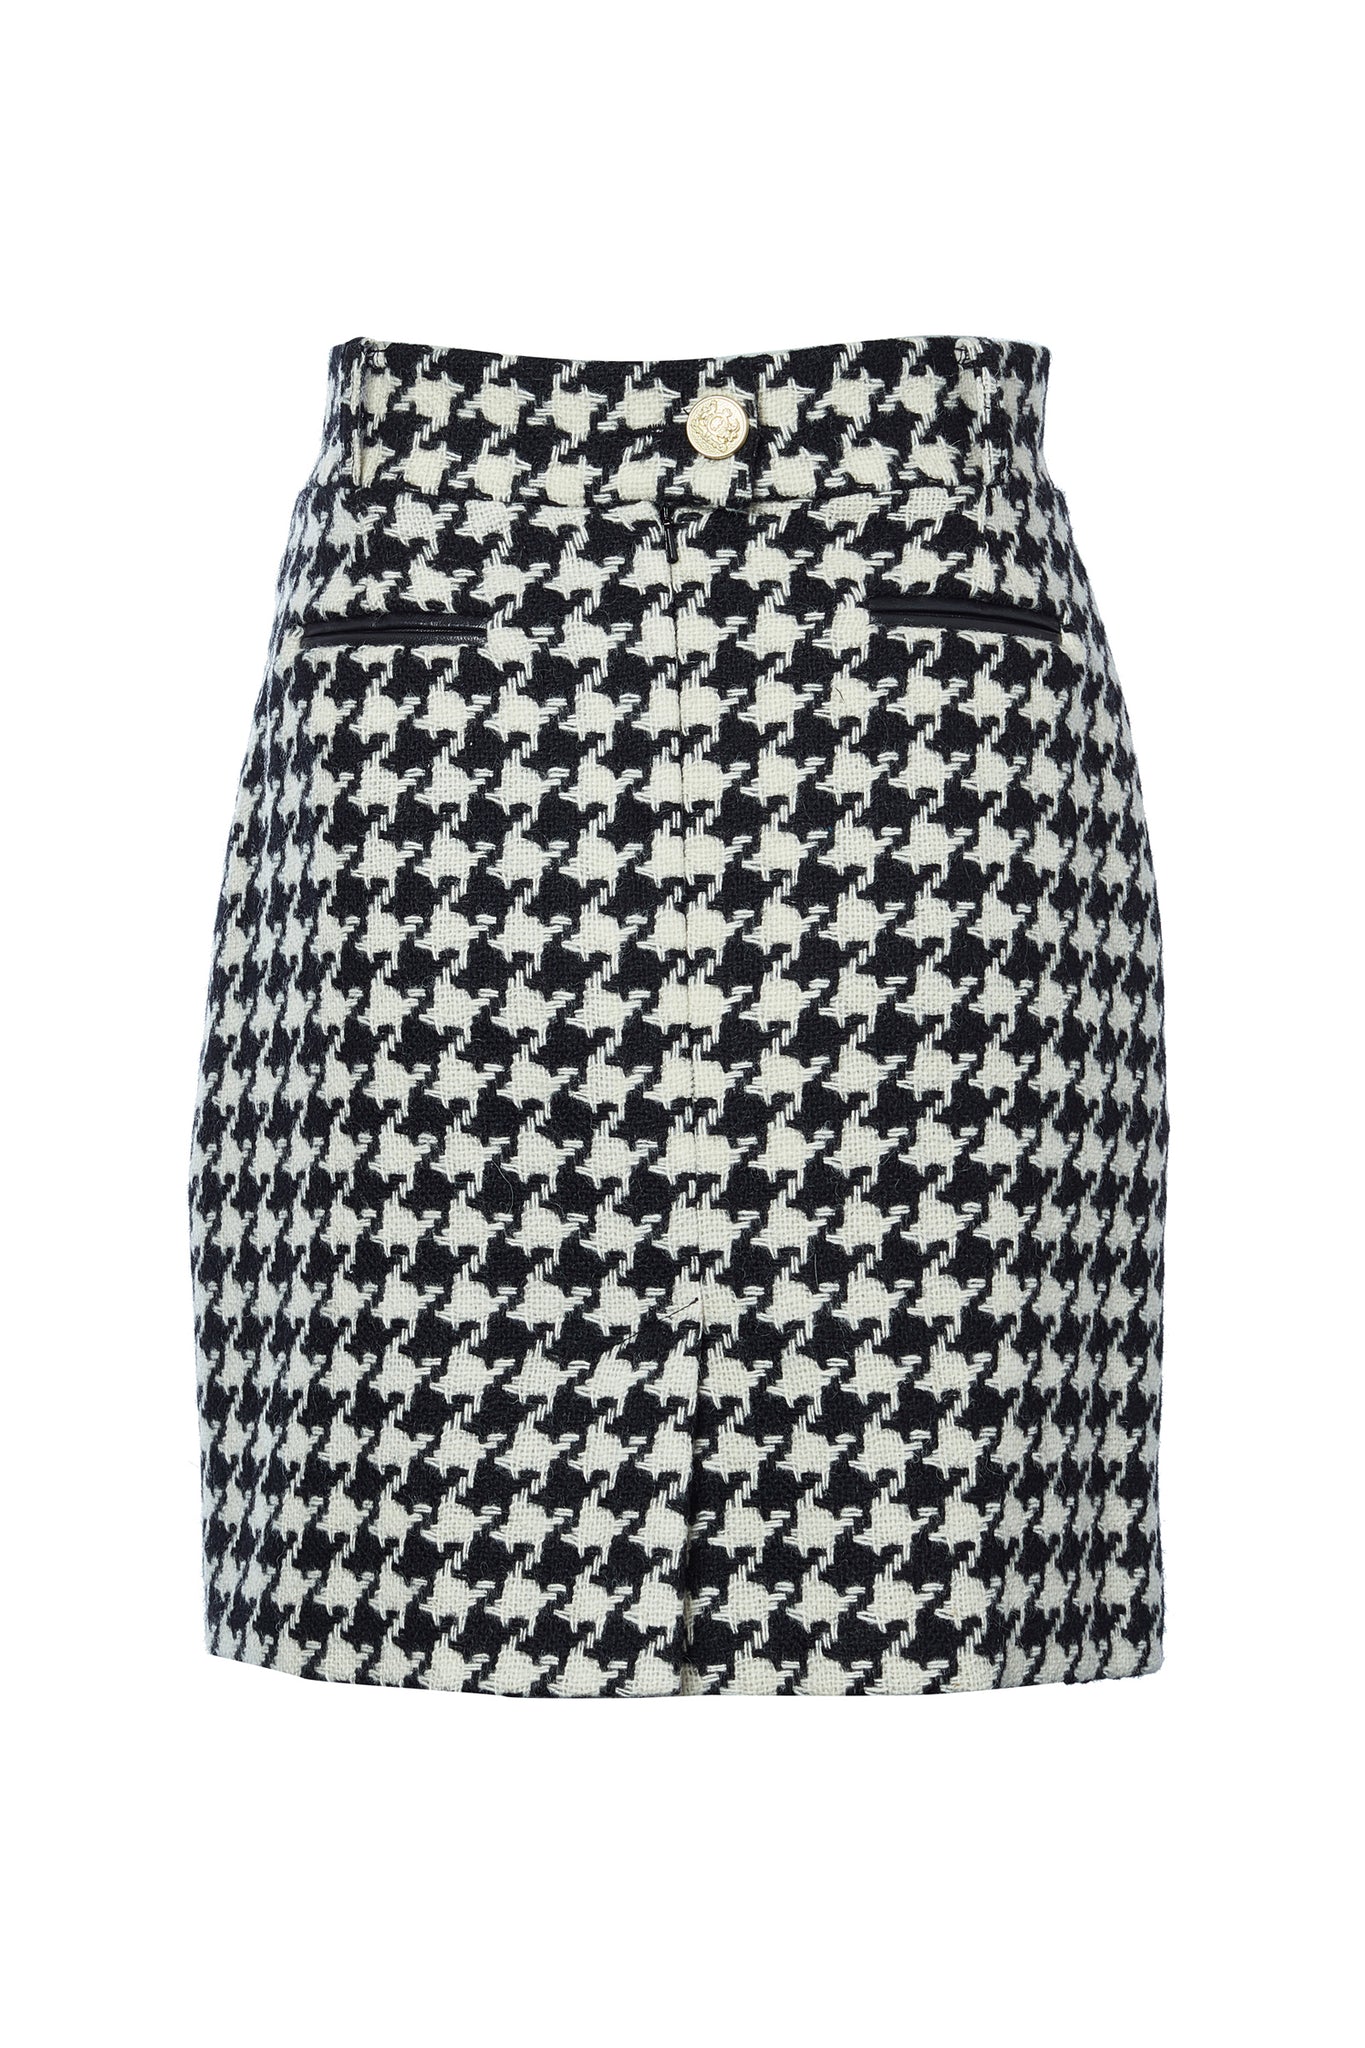 Knightsbridge Skirt (Large Scale Houndstooth) – Holland Cooper